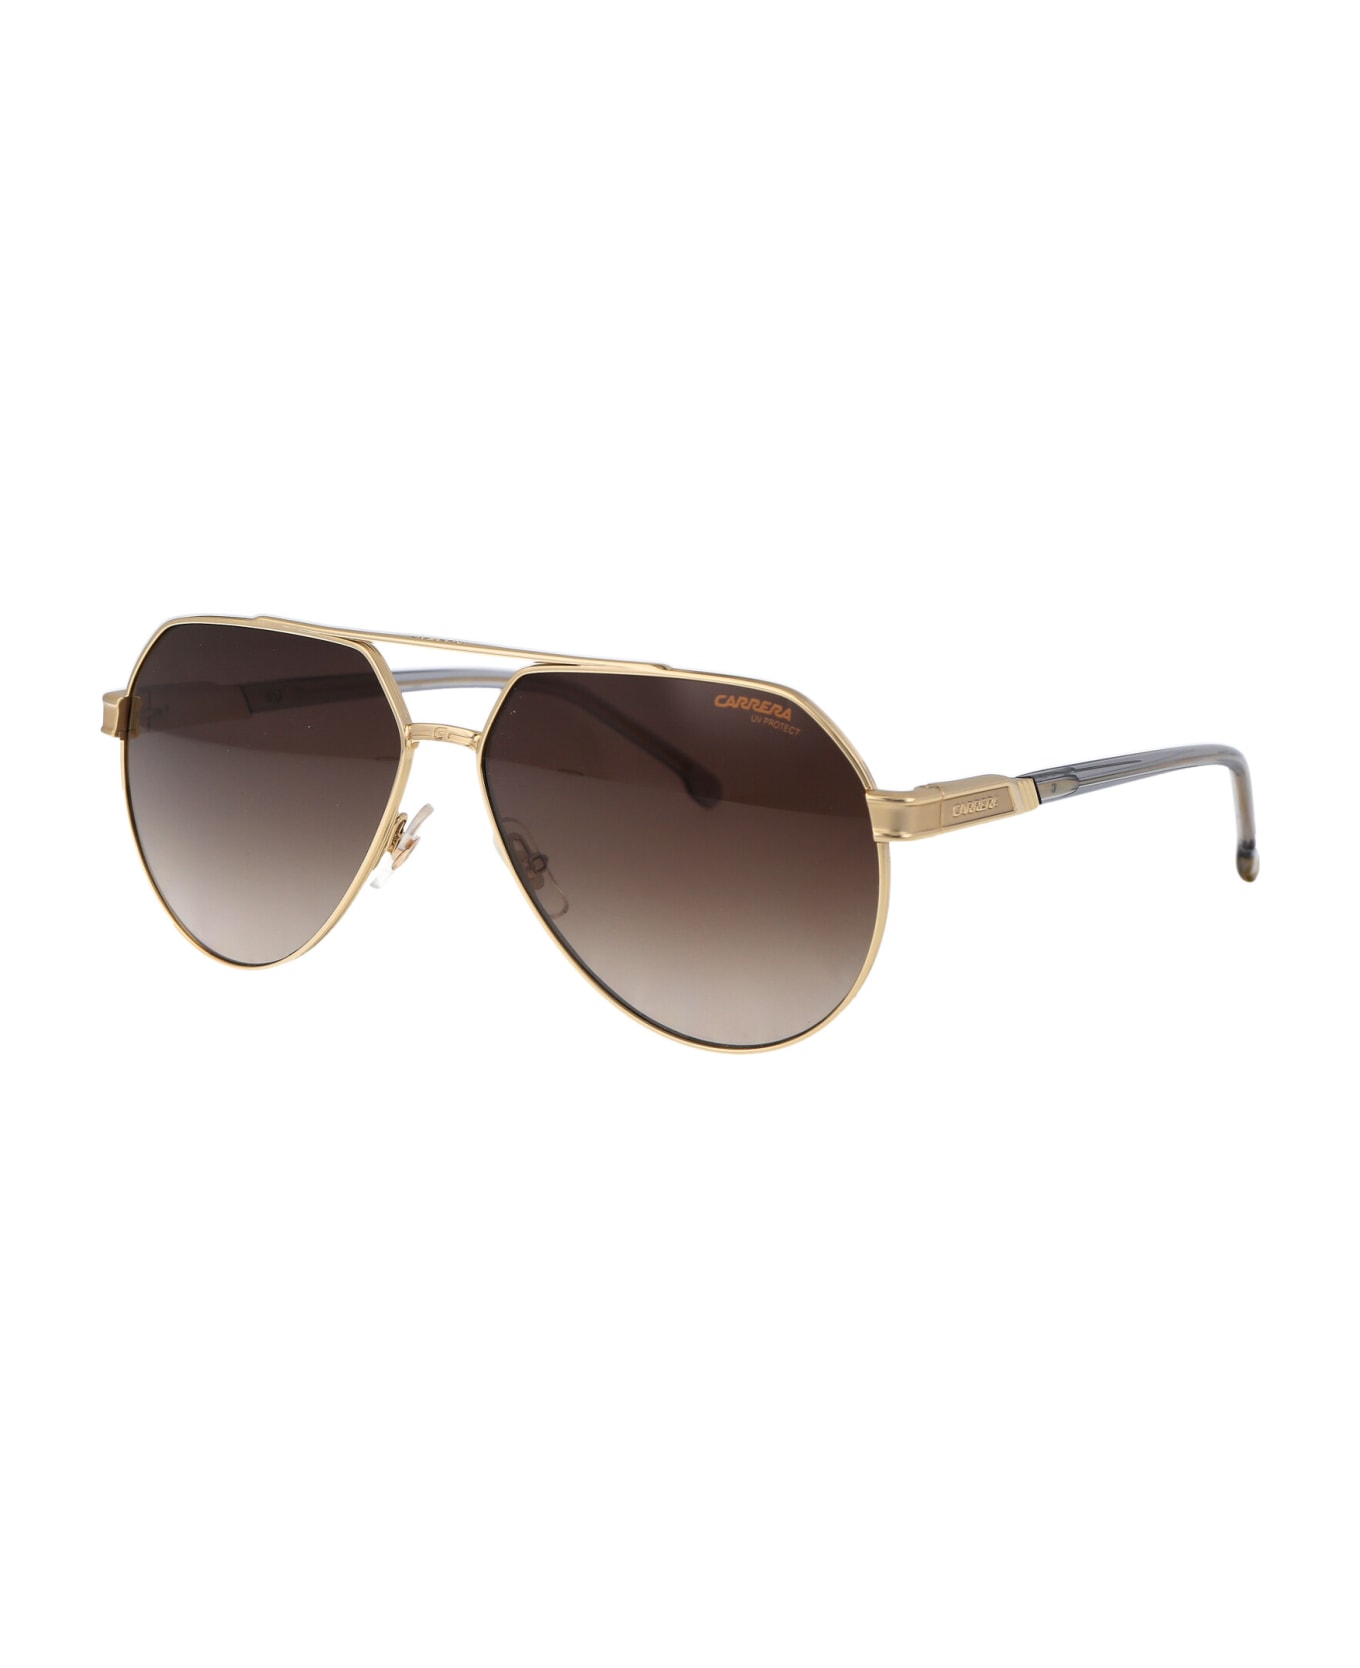 Carrera 1067/s Sunglasses - 2F7HA GOLD GREY